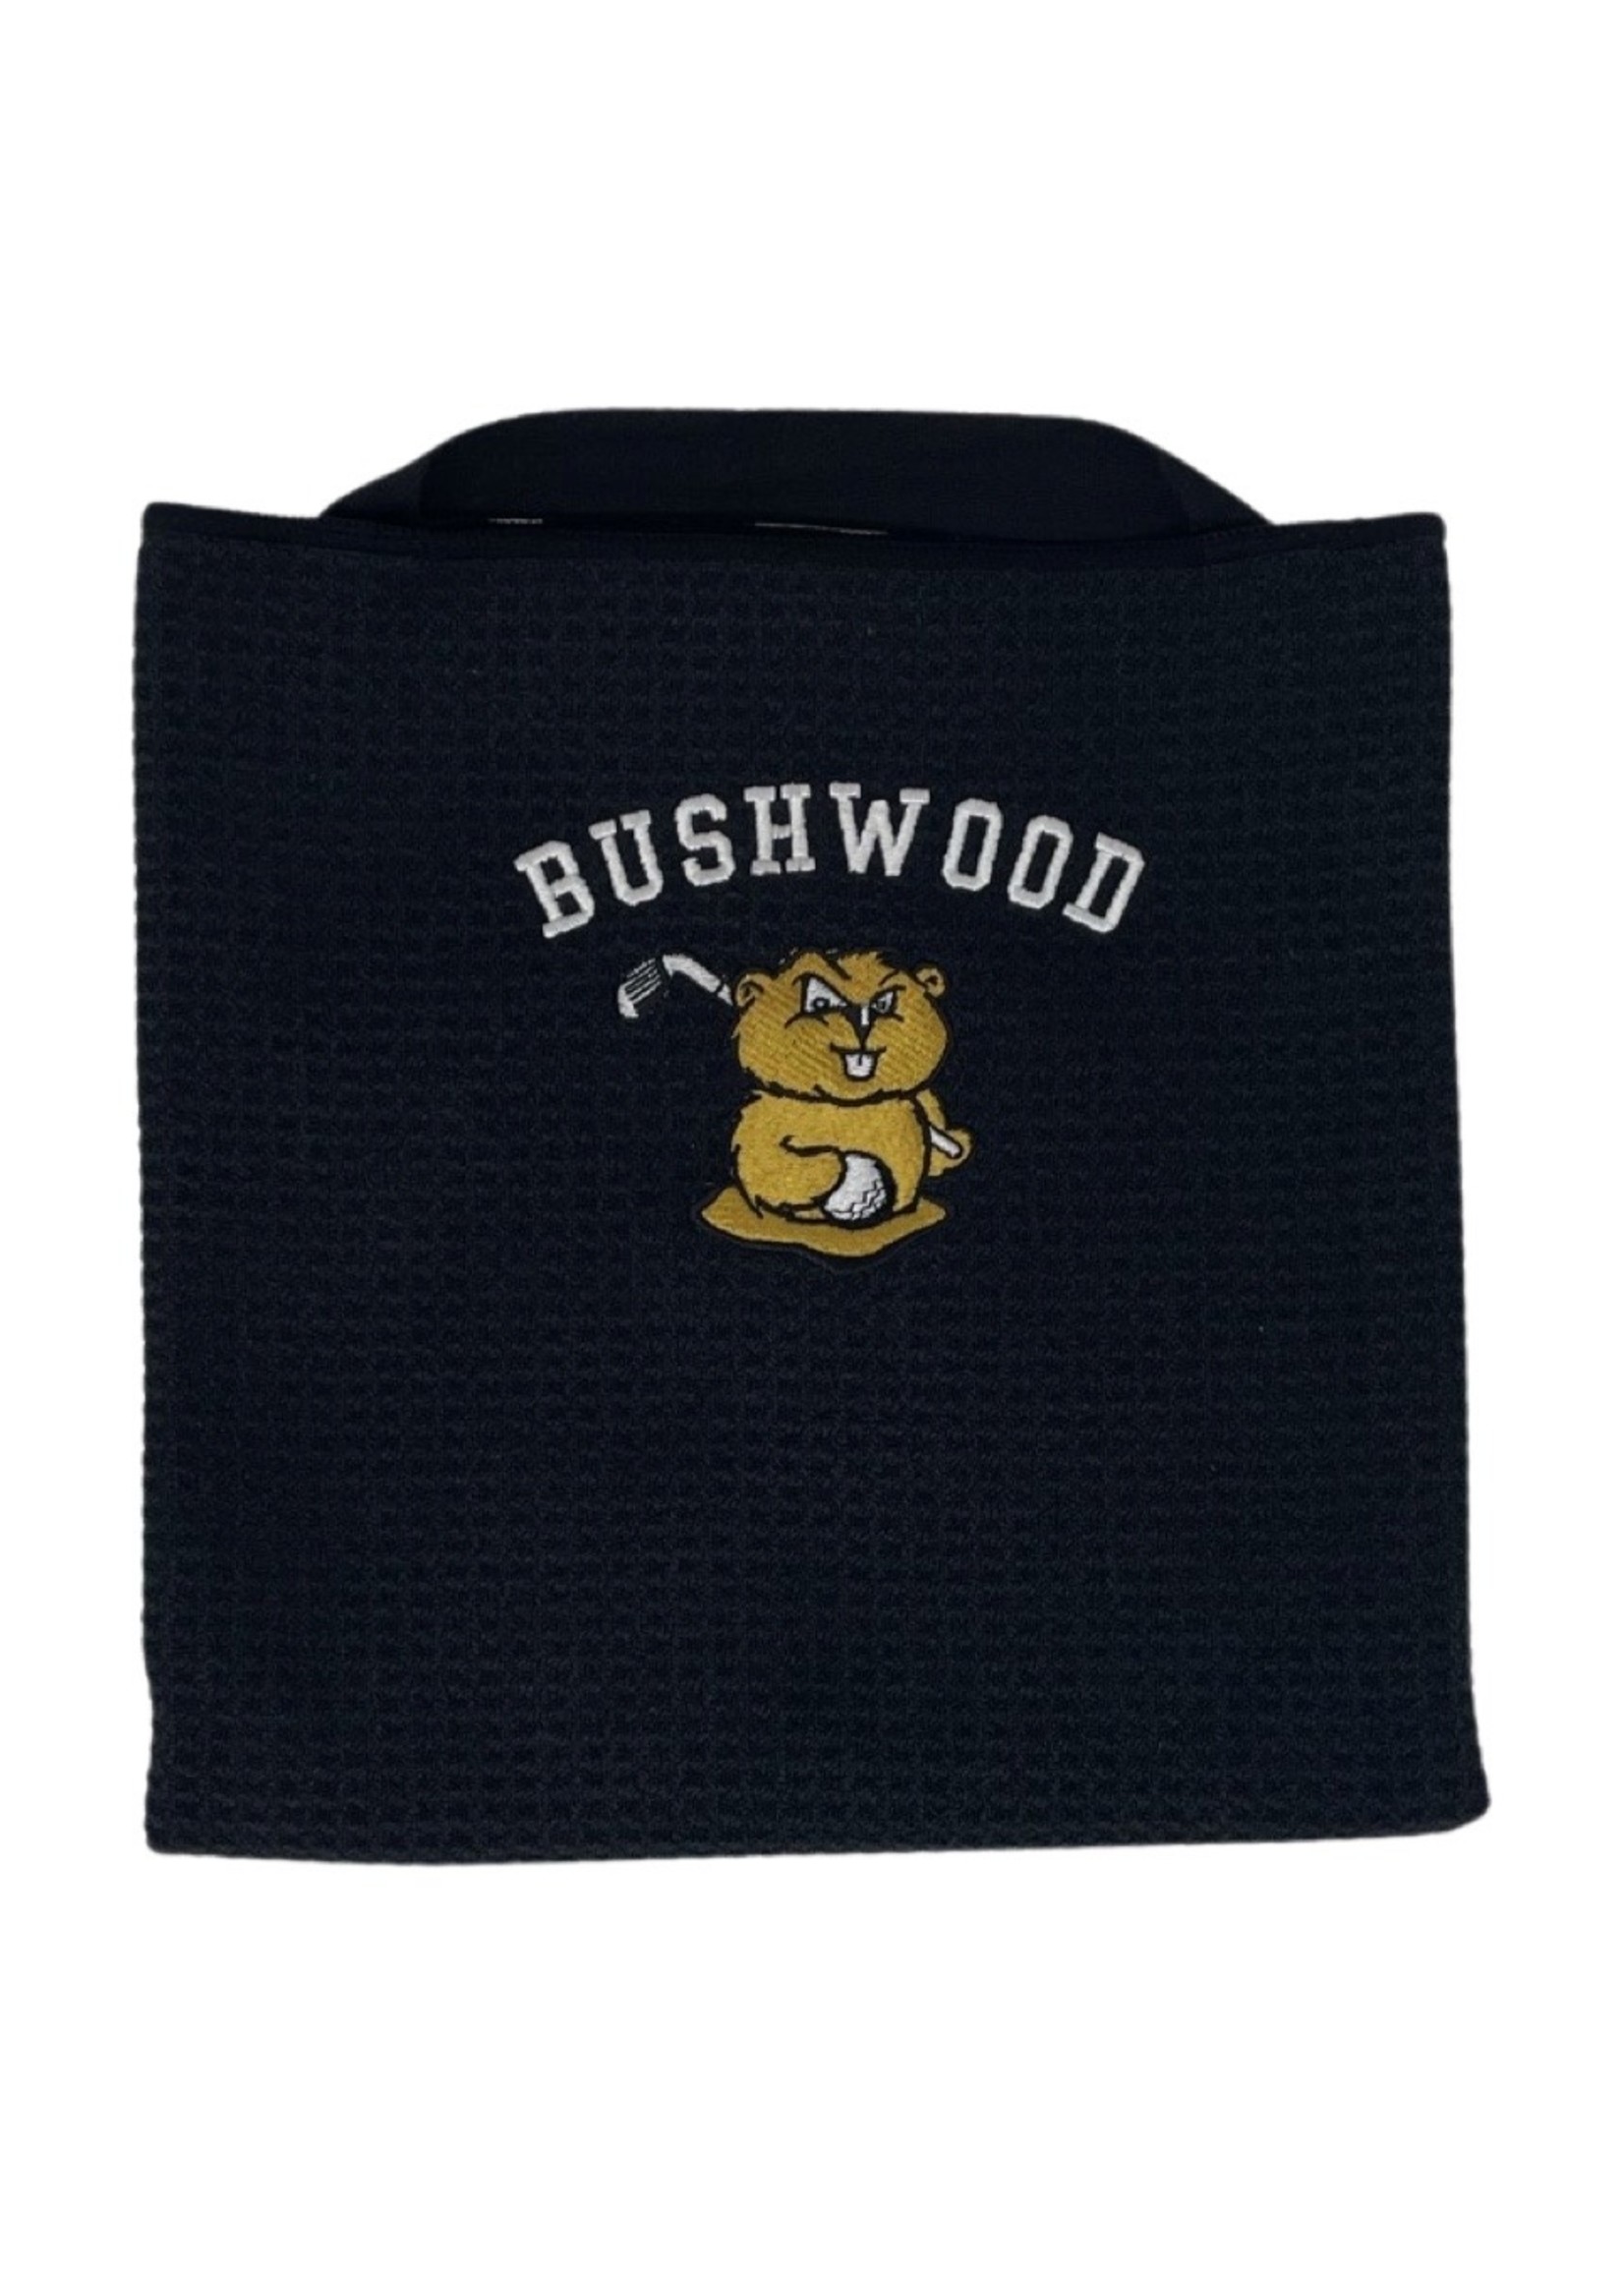 Titleist Bushwood Callaway Players Towel